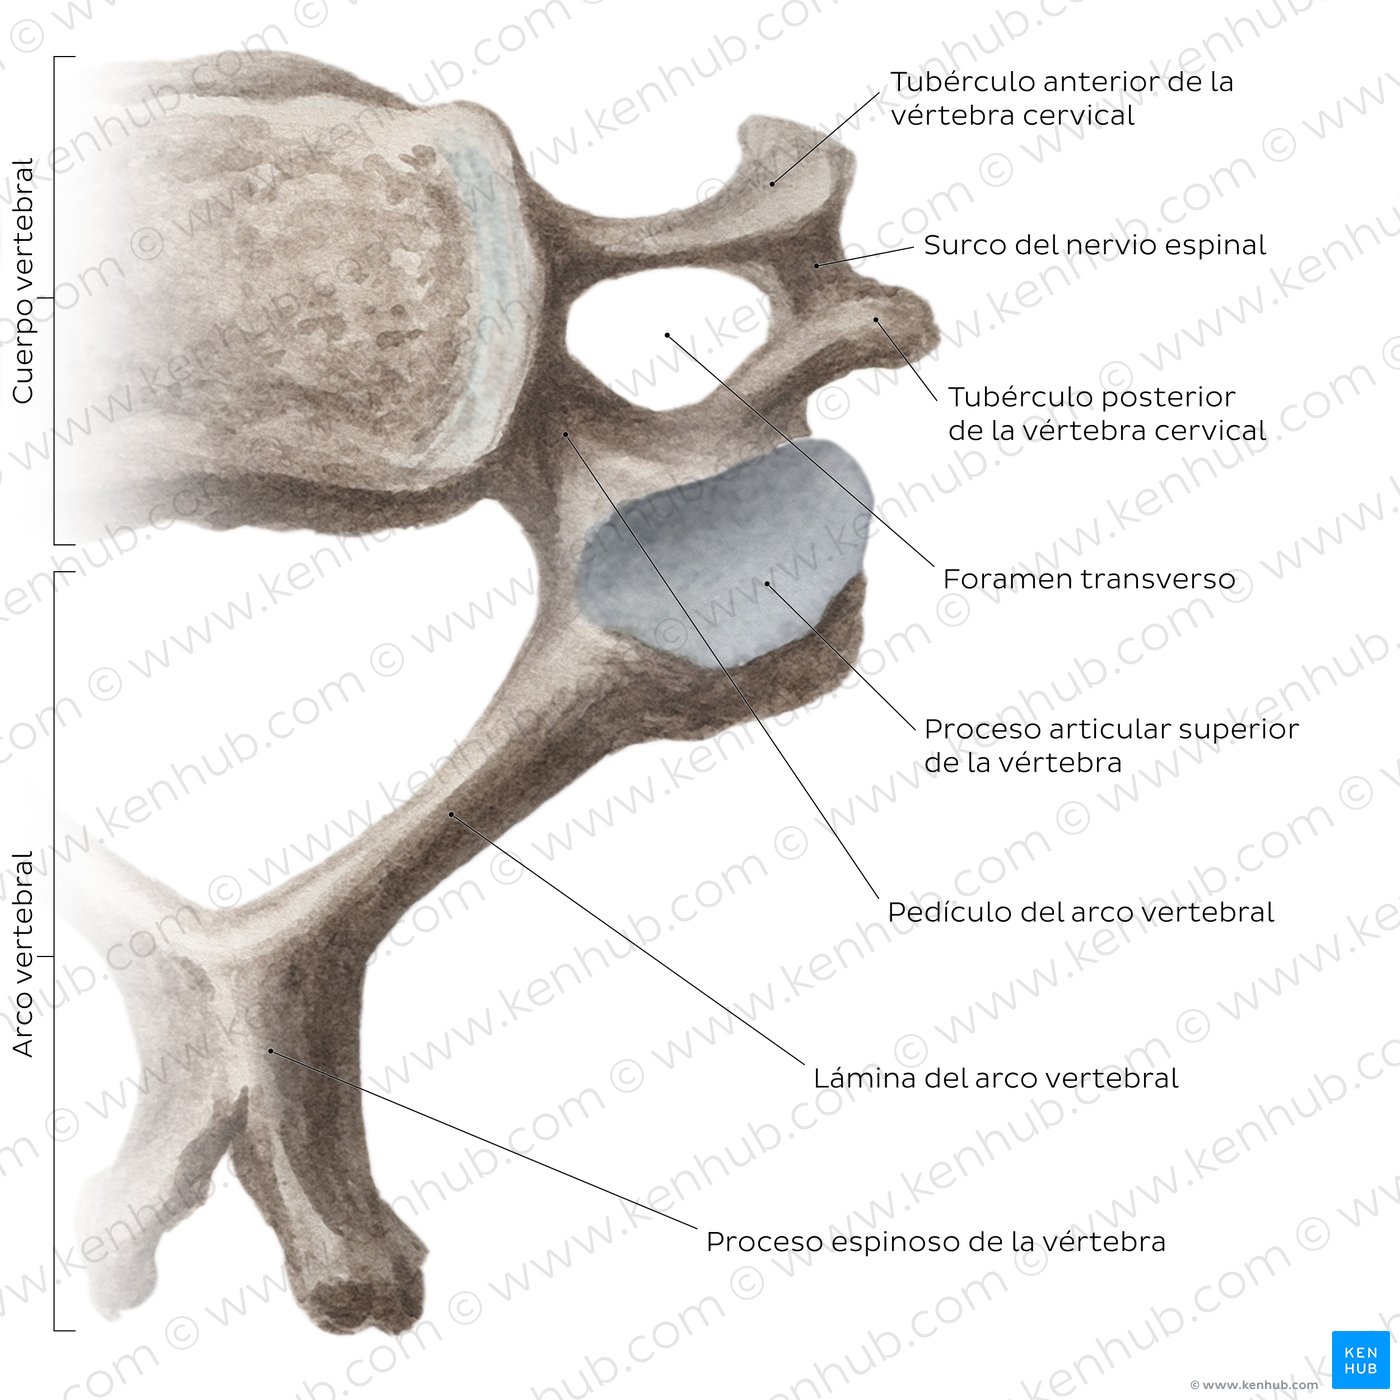 Vértebras cervicales típicas